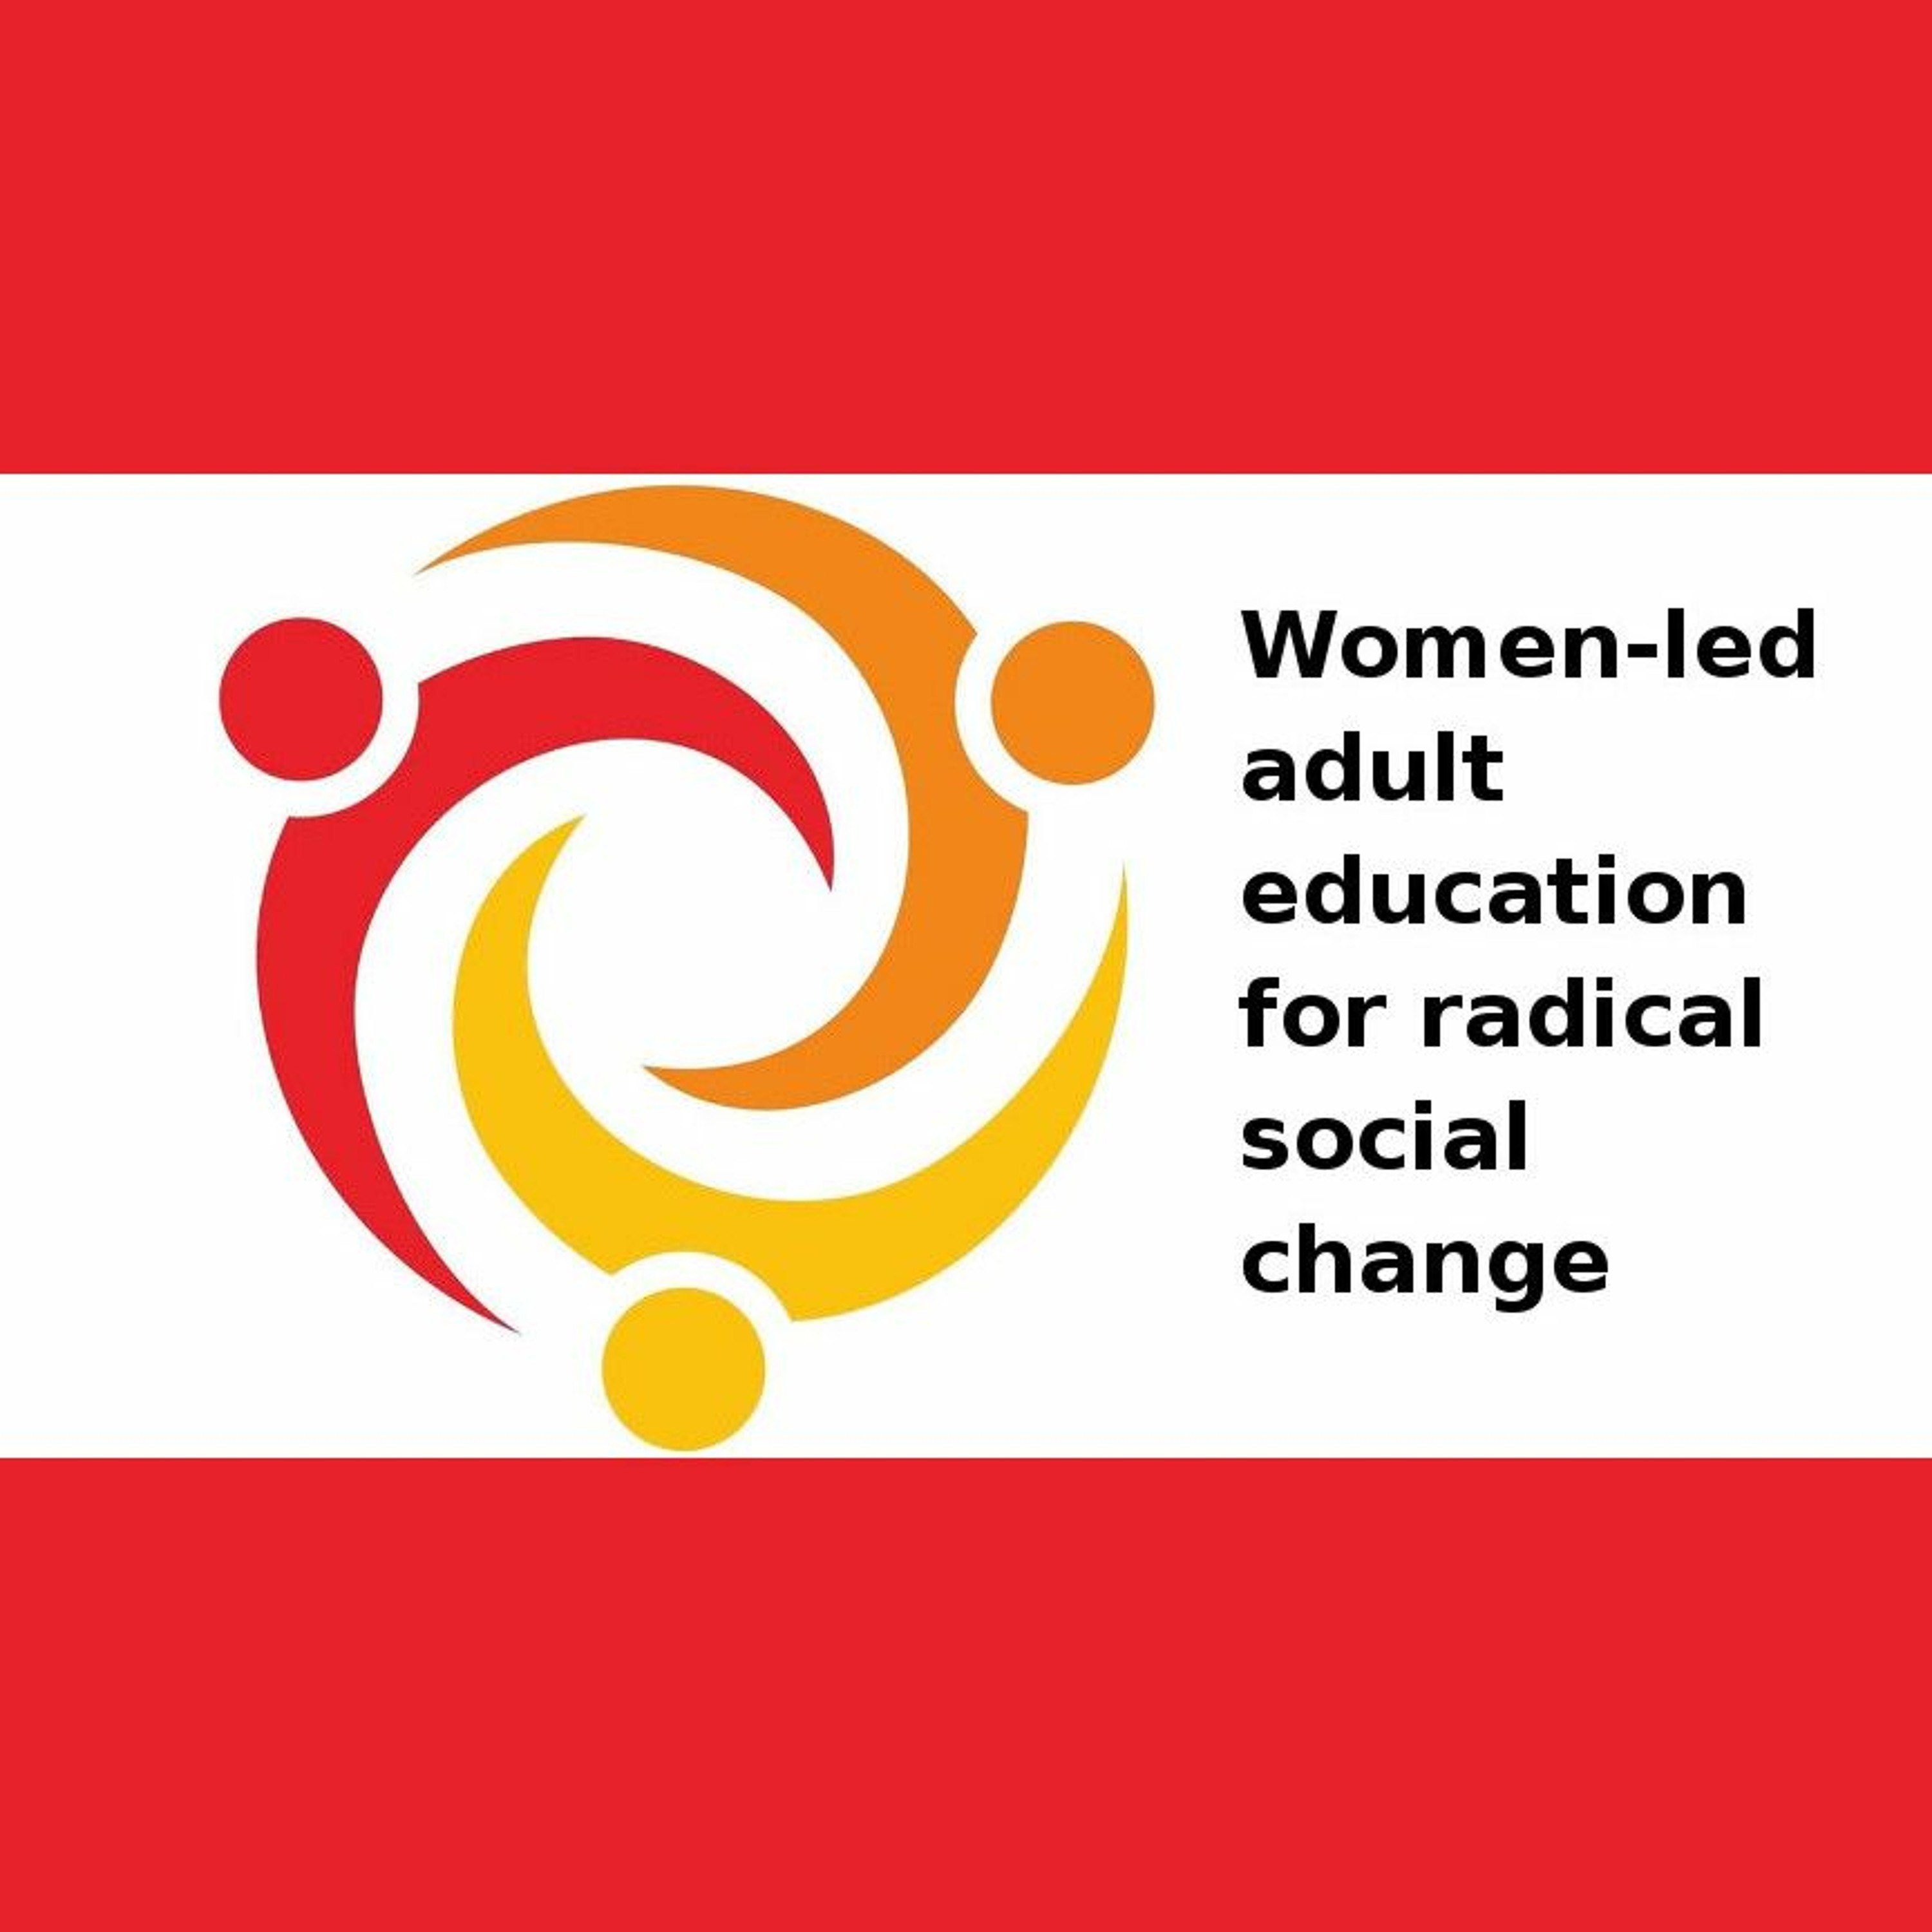 Women-led adult education for radical social change